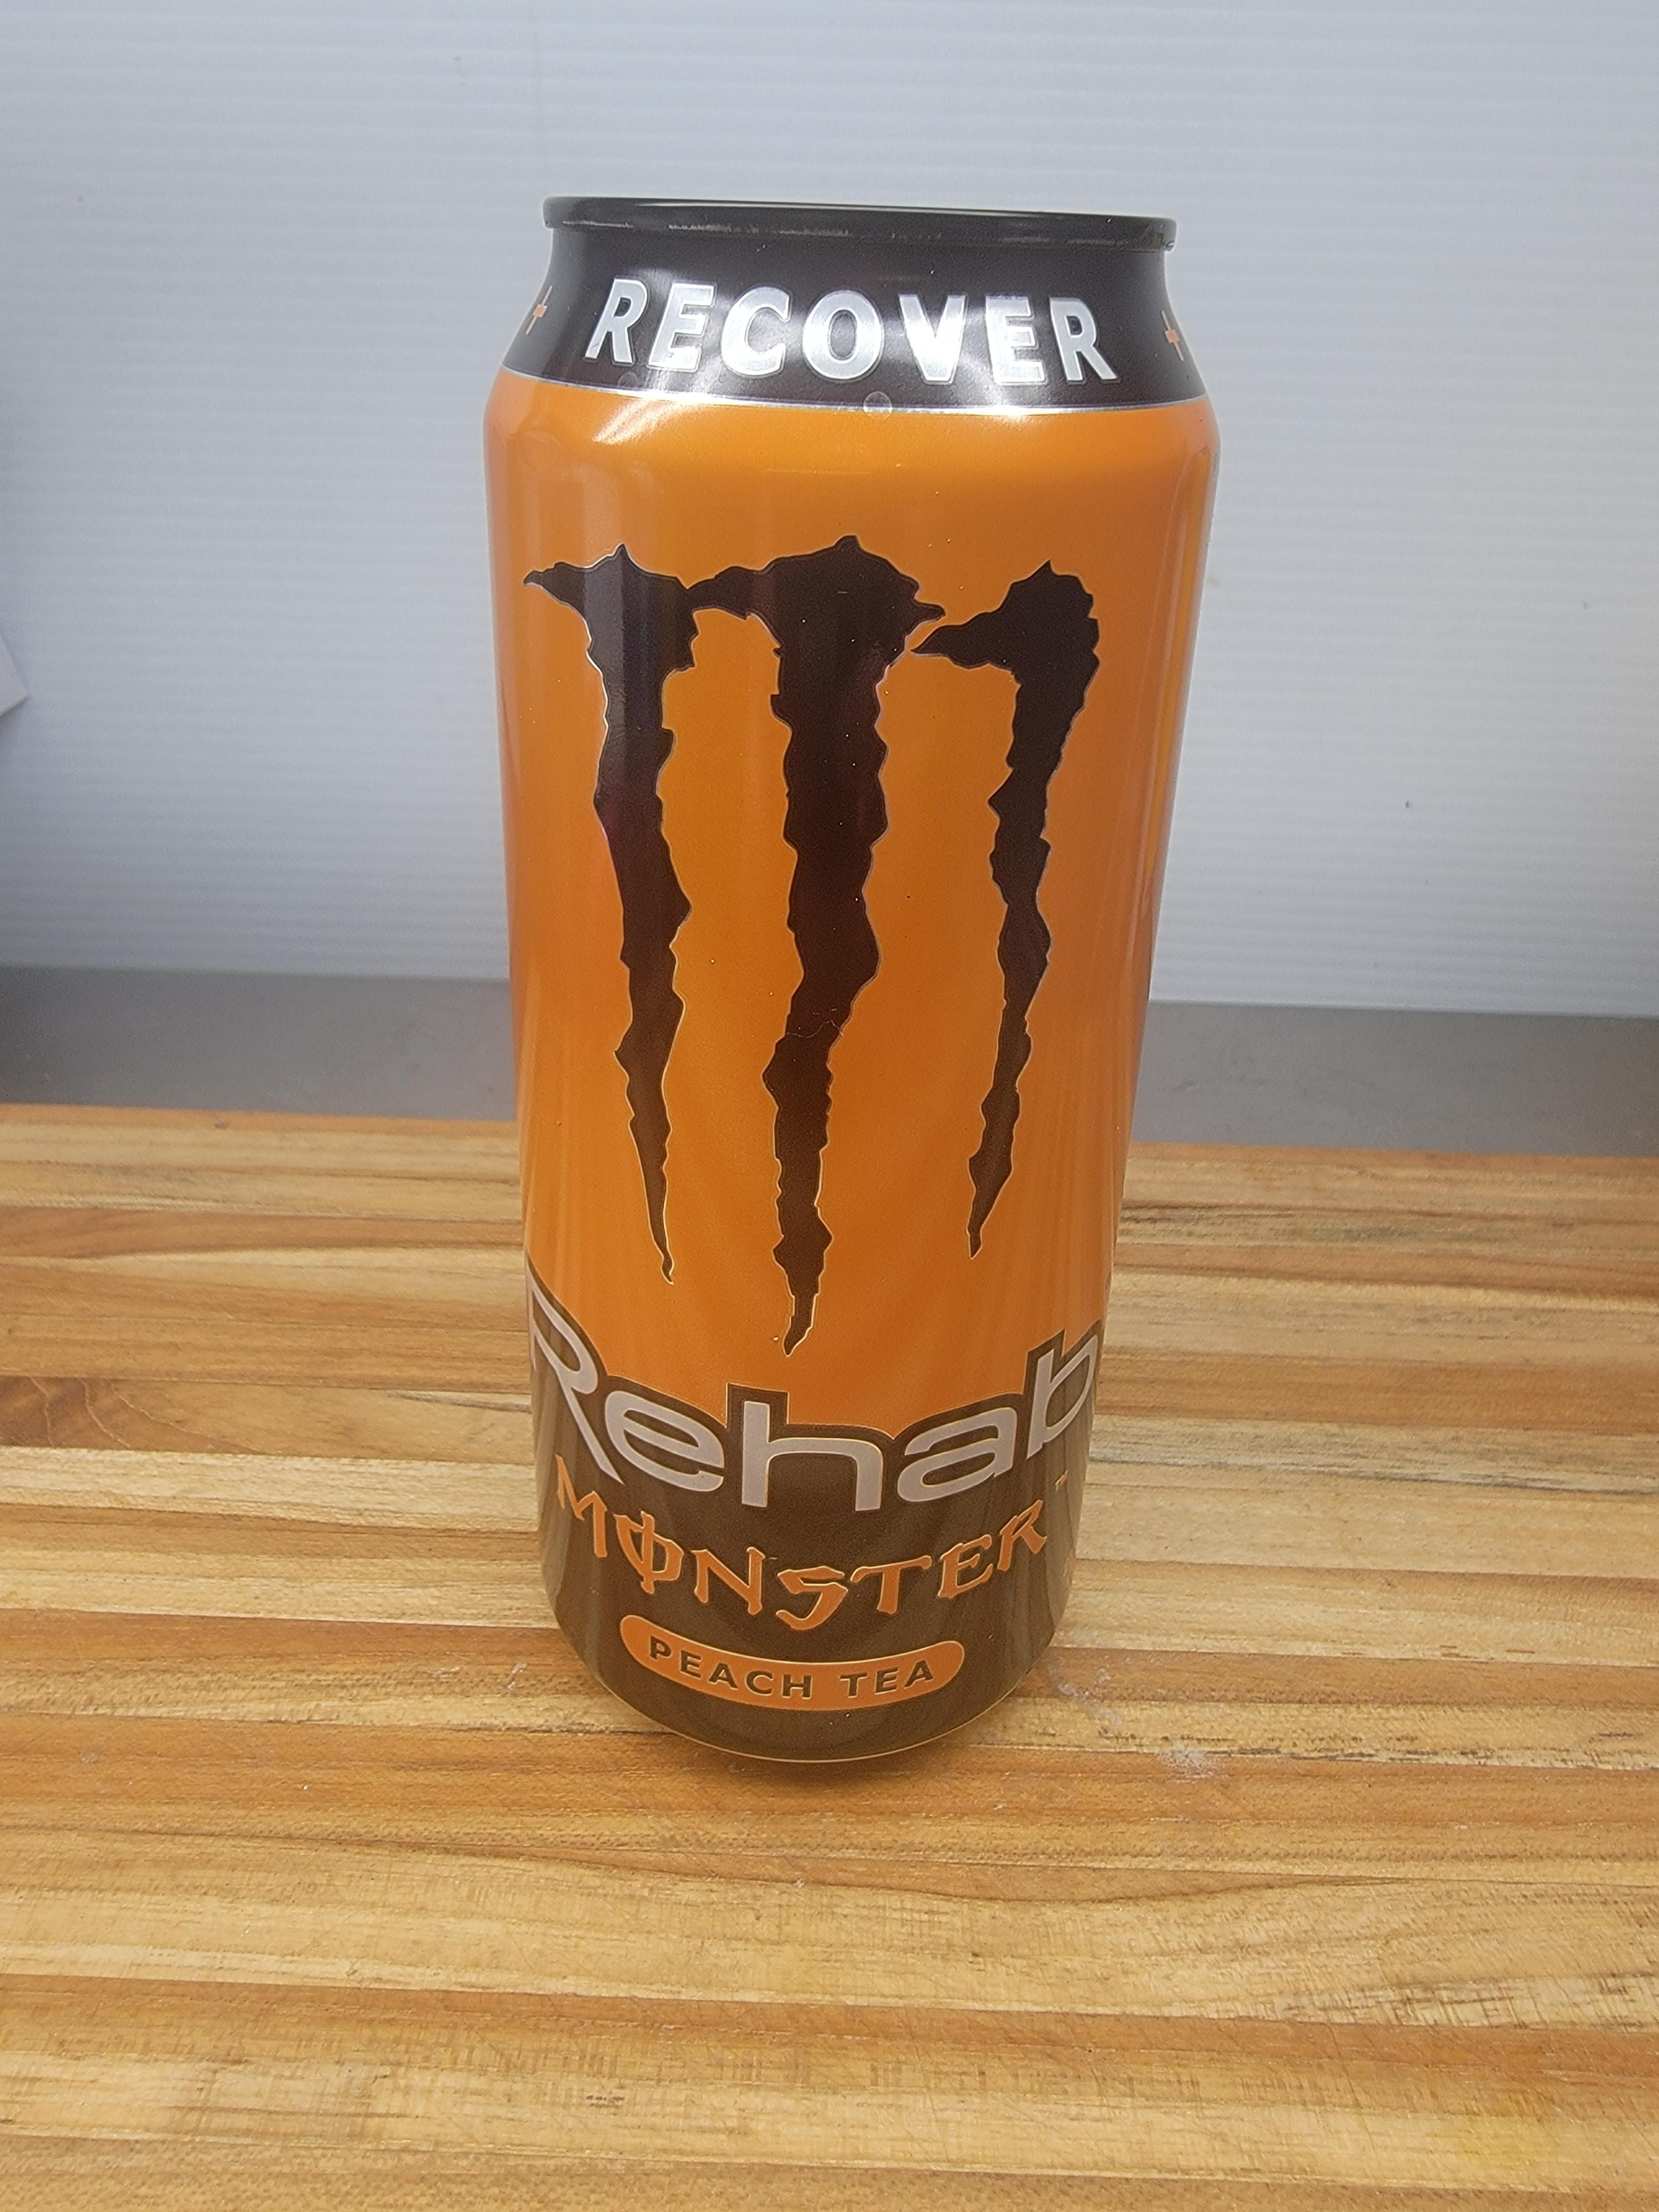 Monster Peach - Can